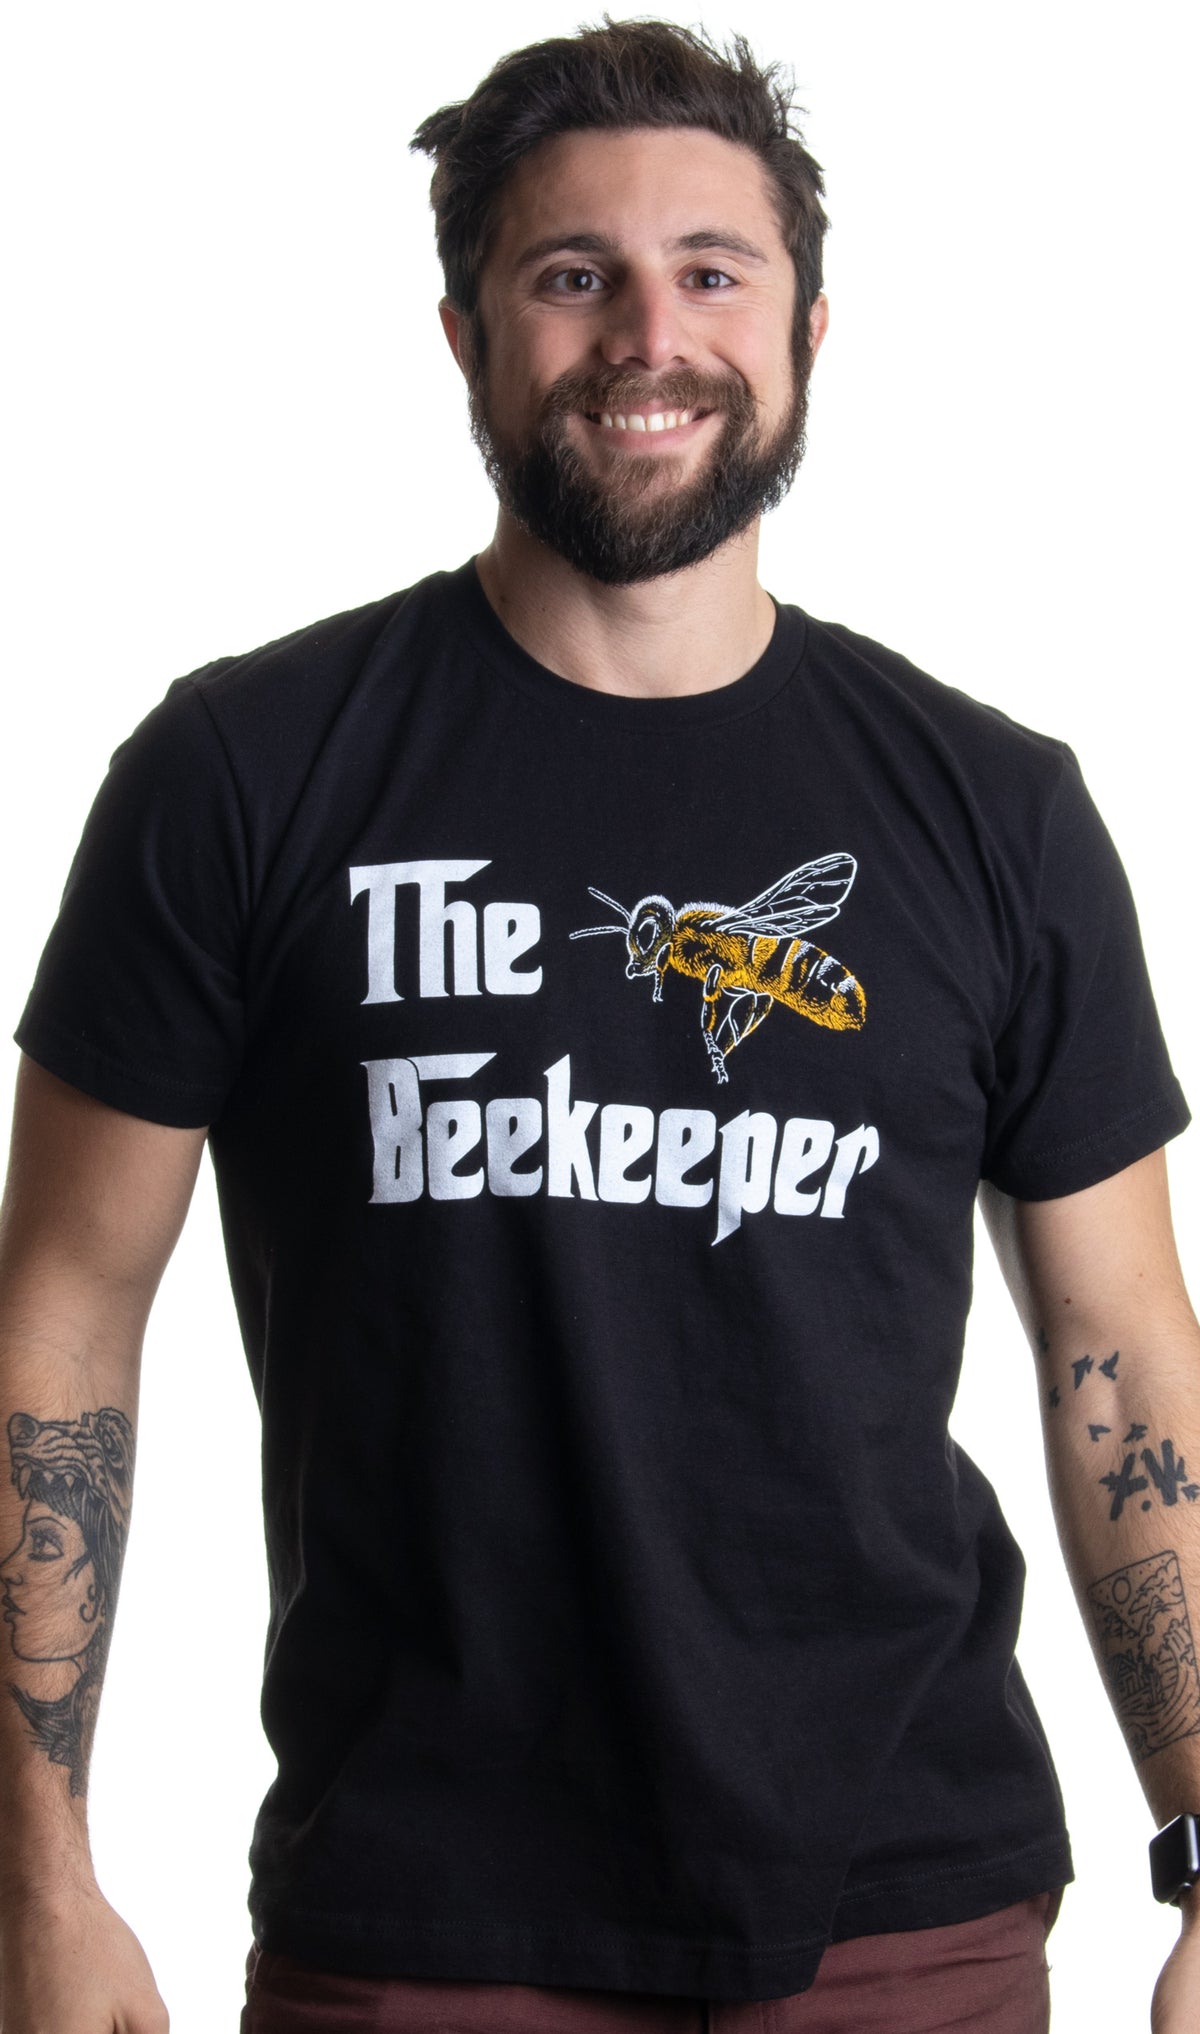 The Beekeeper | Bee Keeper Keeping Apiary Cool Funny Joke Men Women T-shirt